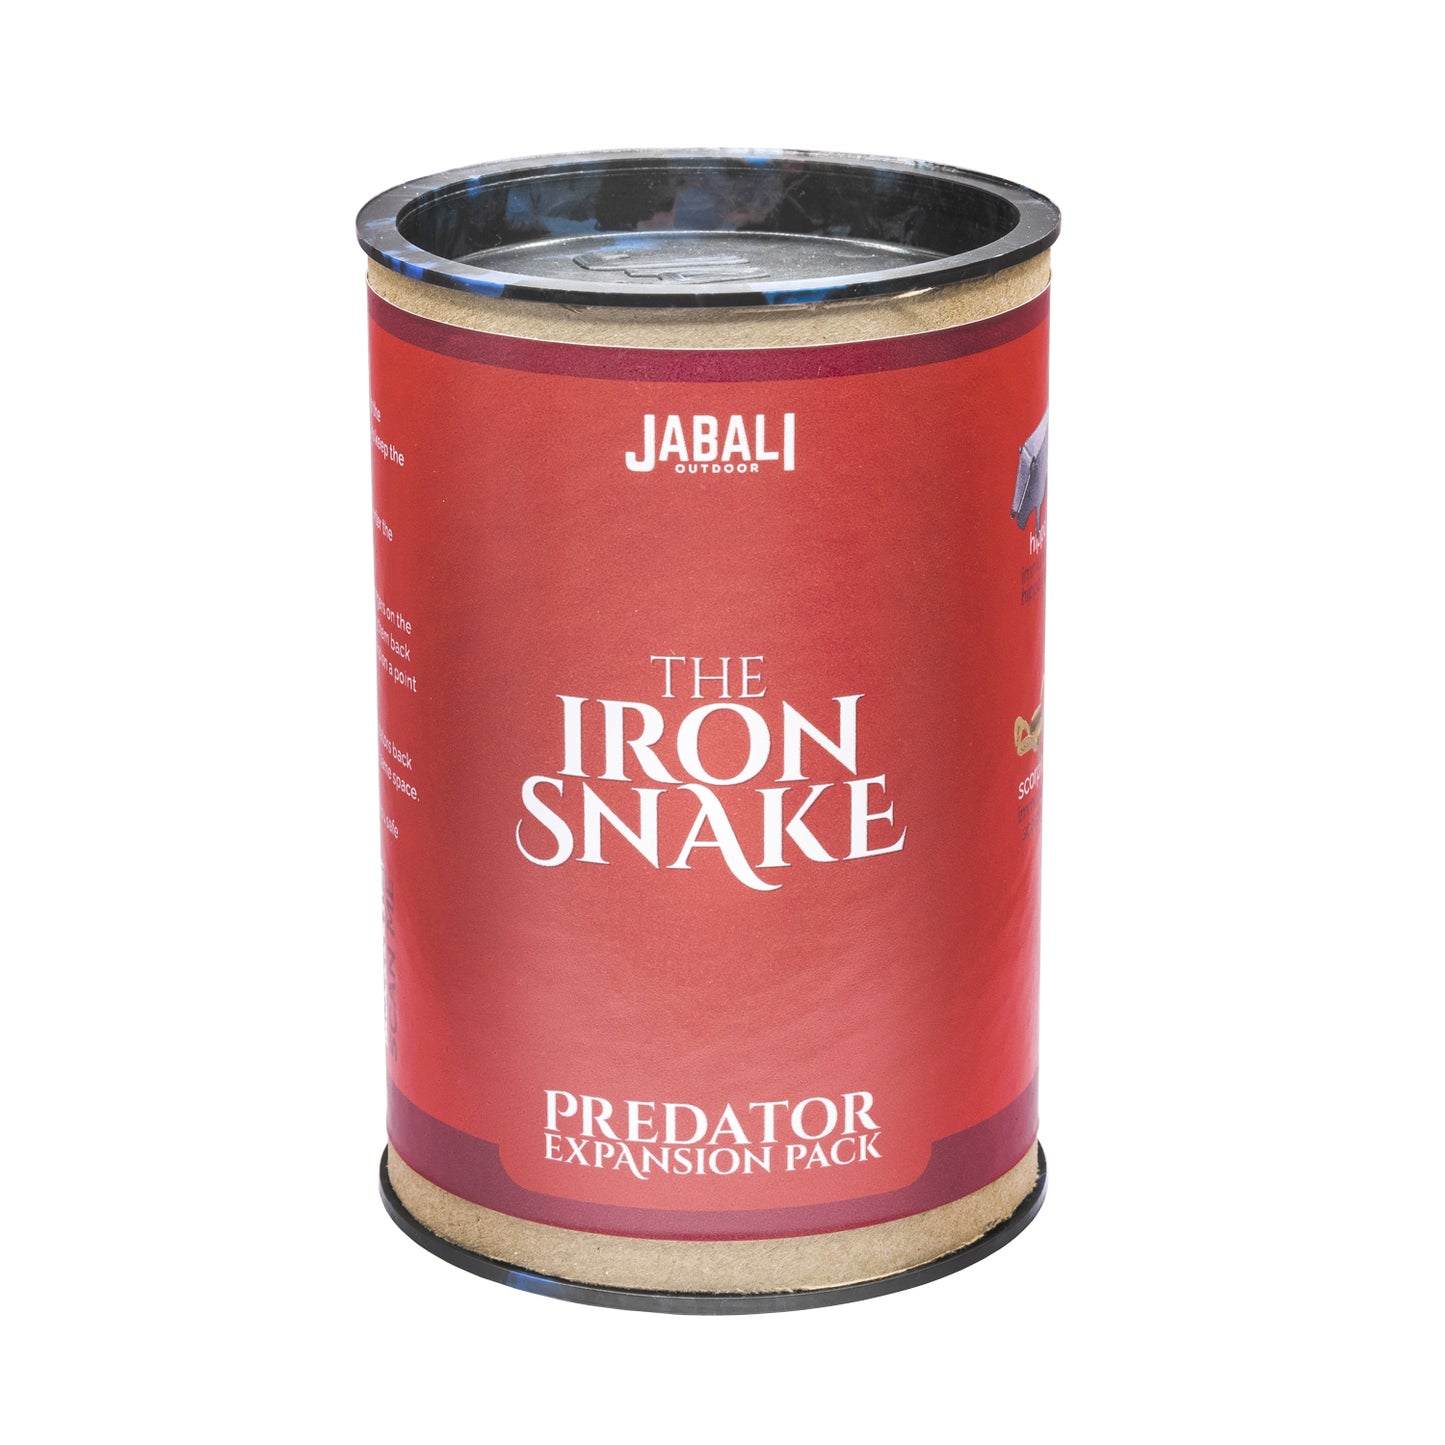 The Iron Snake - Predator Expansion Pack